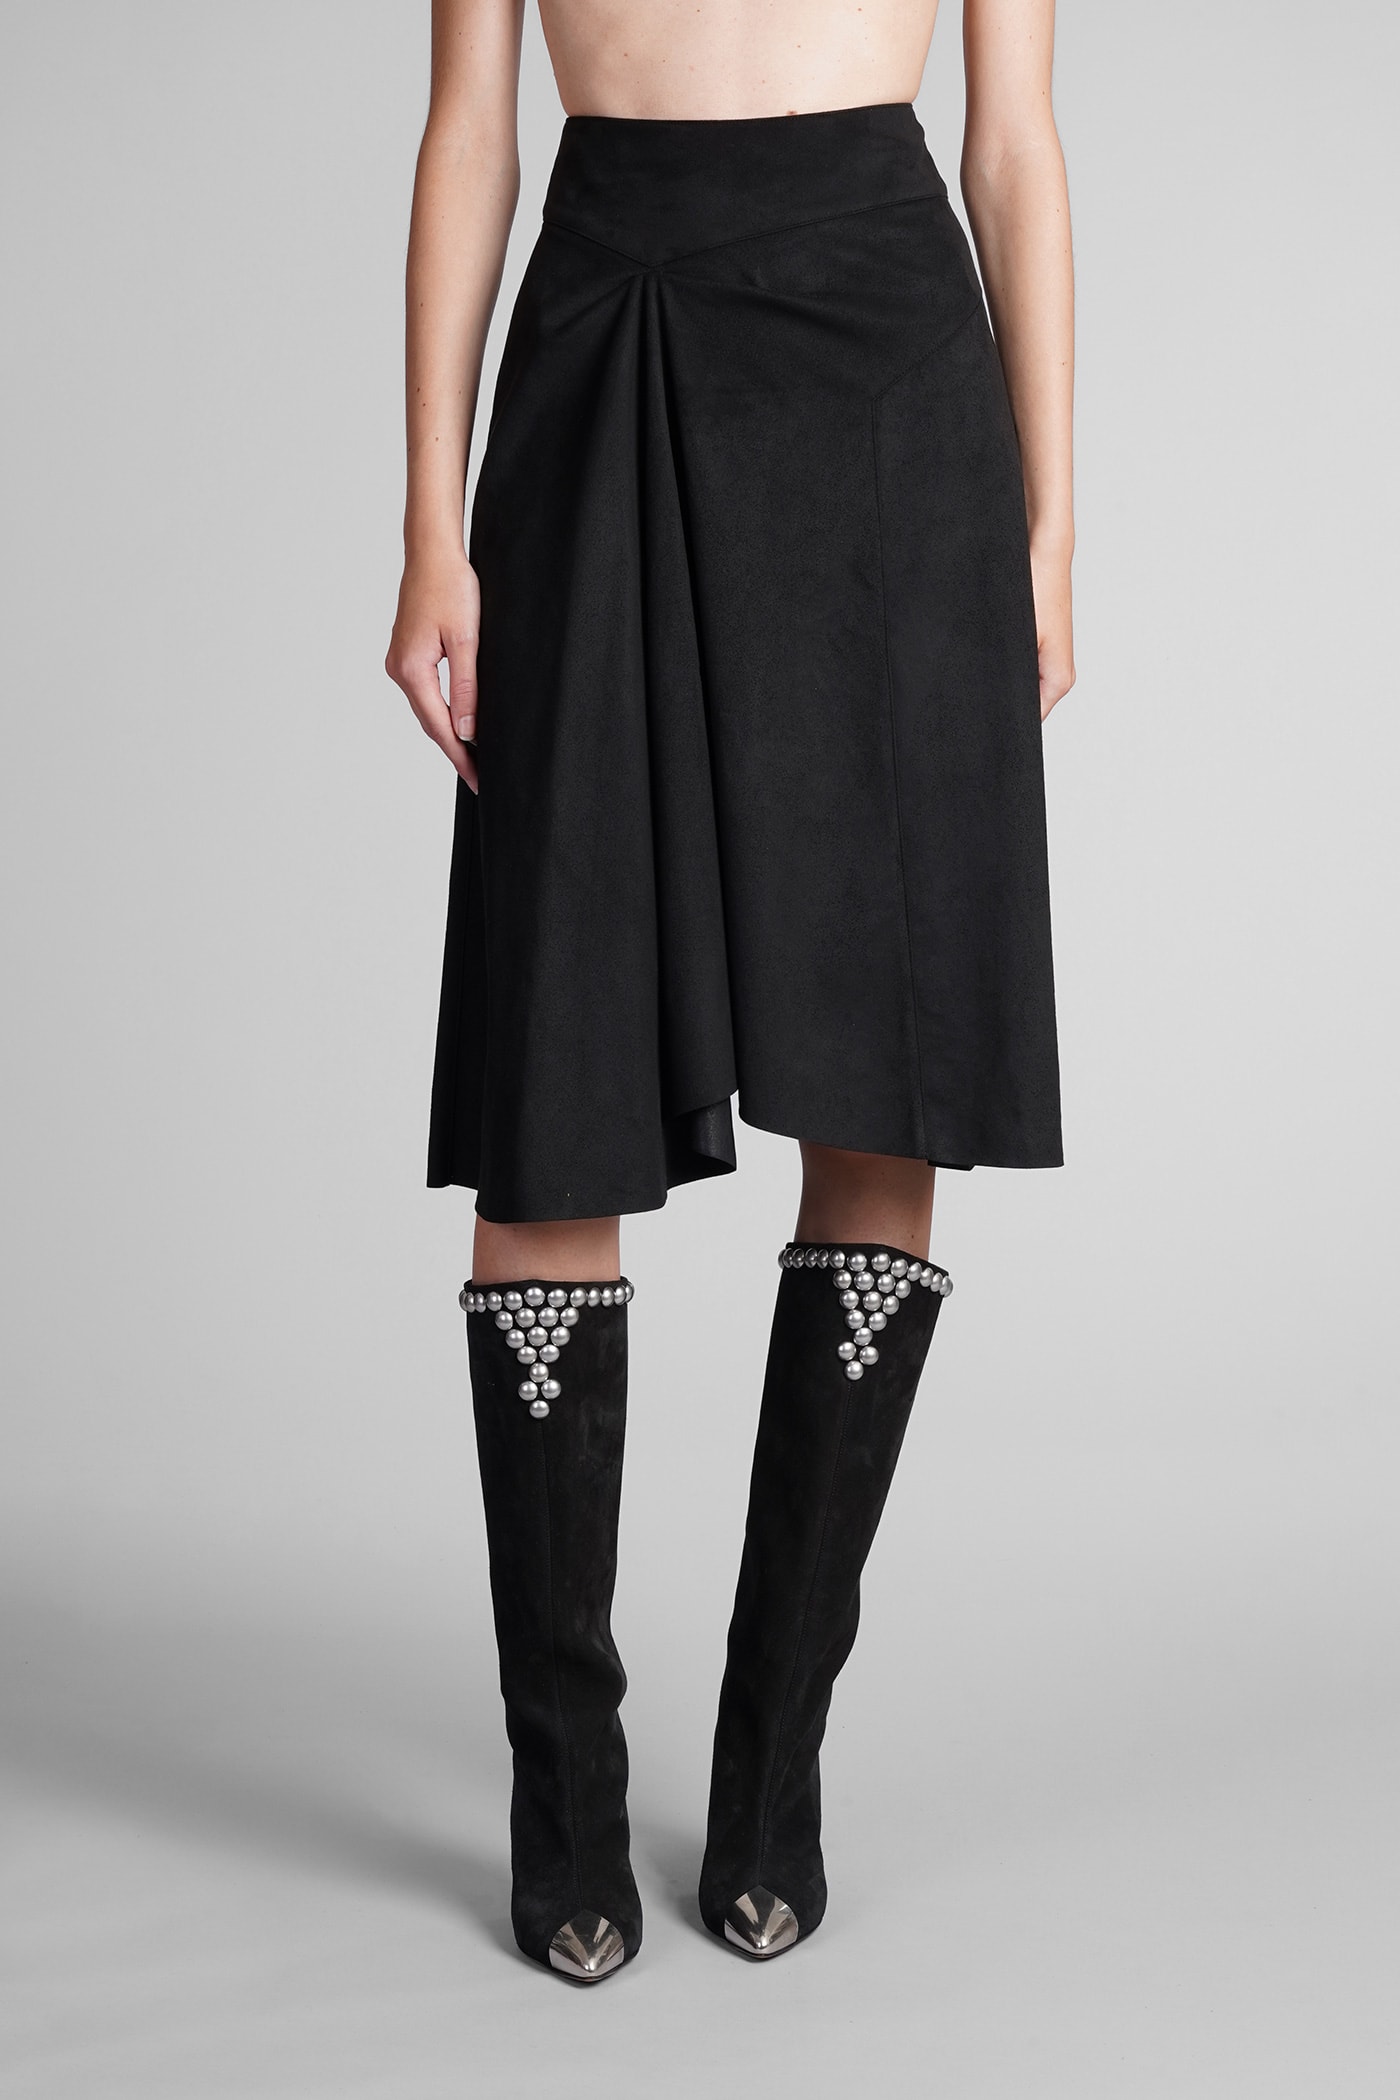 Isabel Marant Chase Skirt In Black Polyester